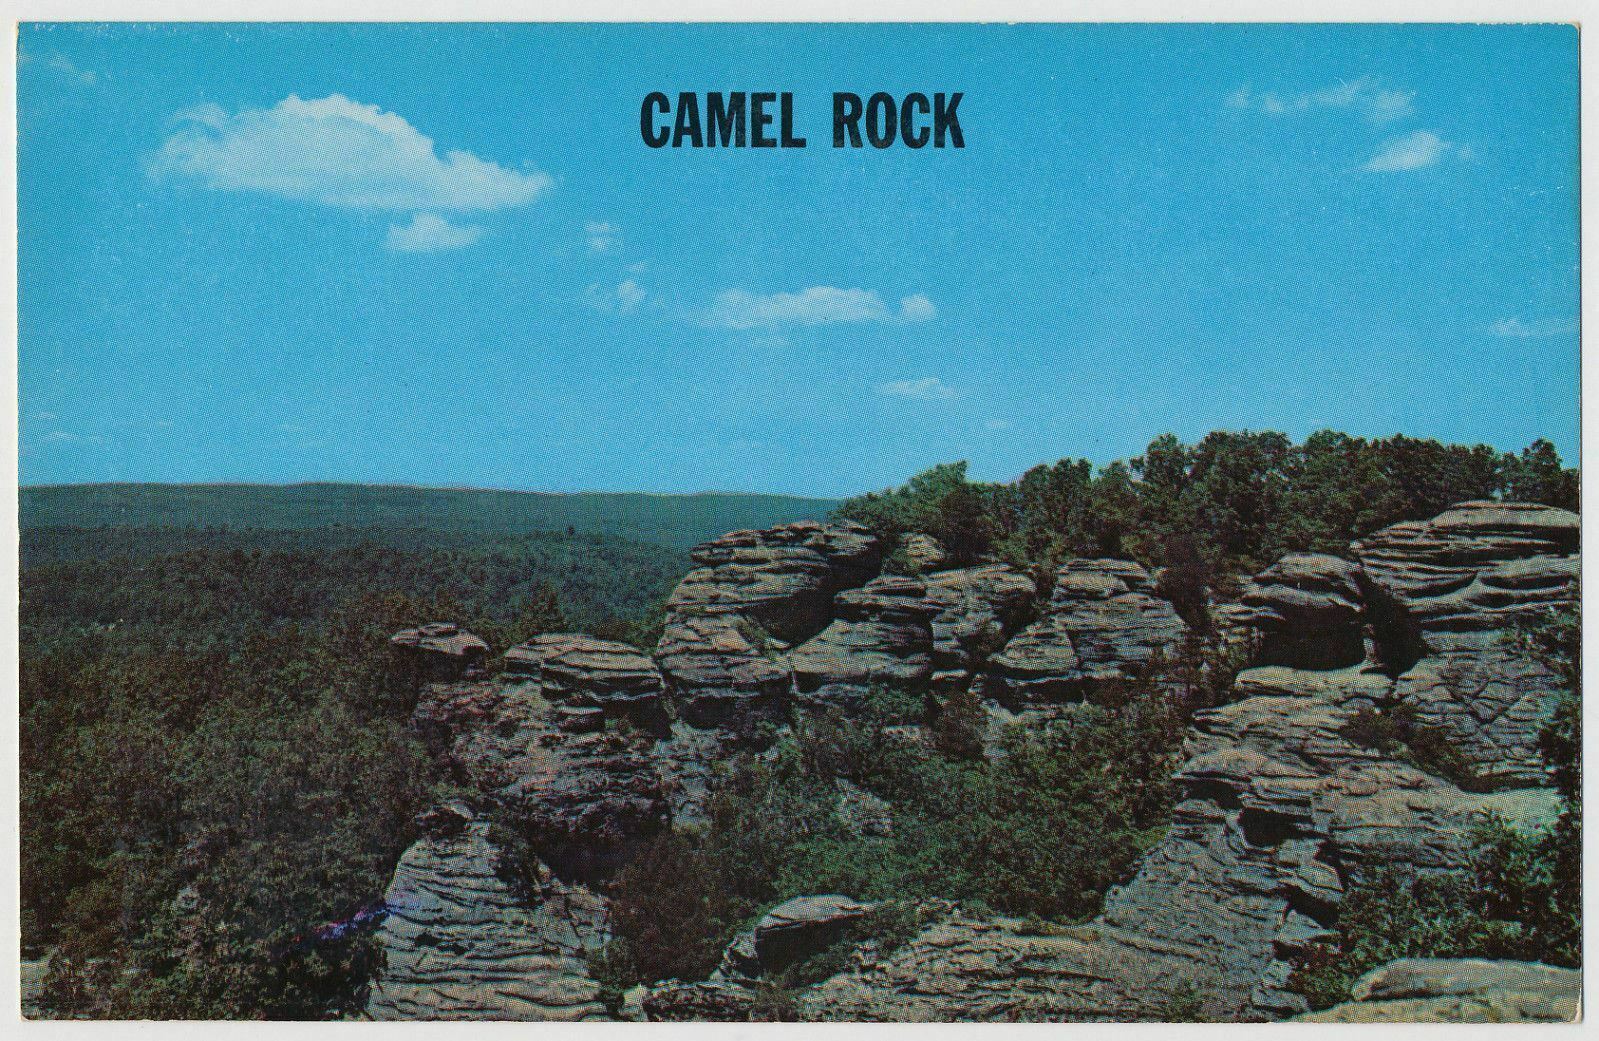 Camel Rock, Shawnee Hills Recreation Area near Harrisburg, Illinois